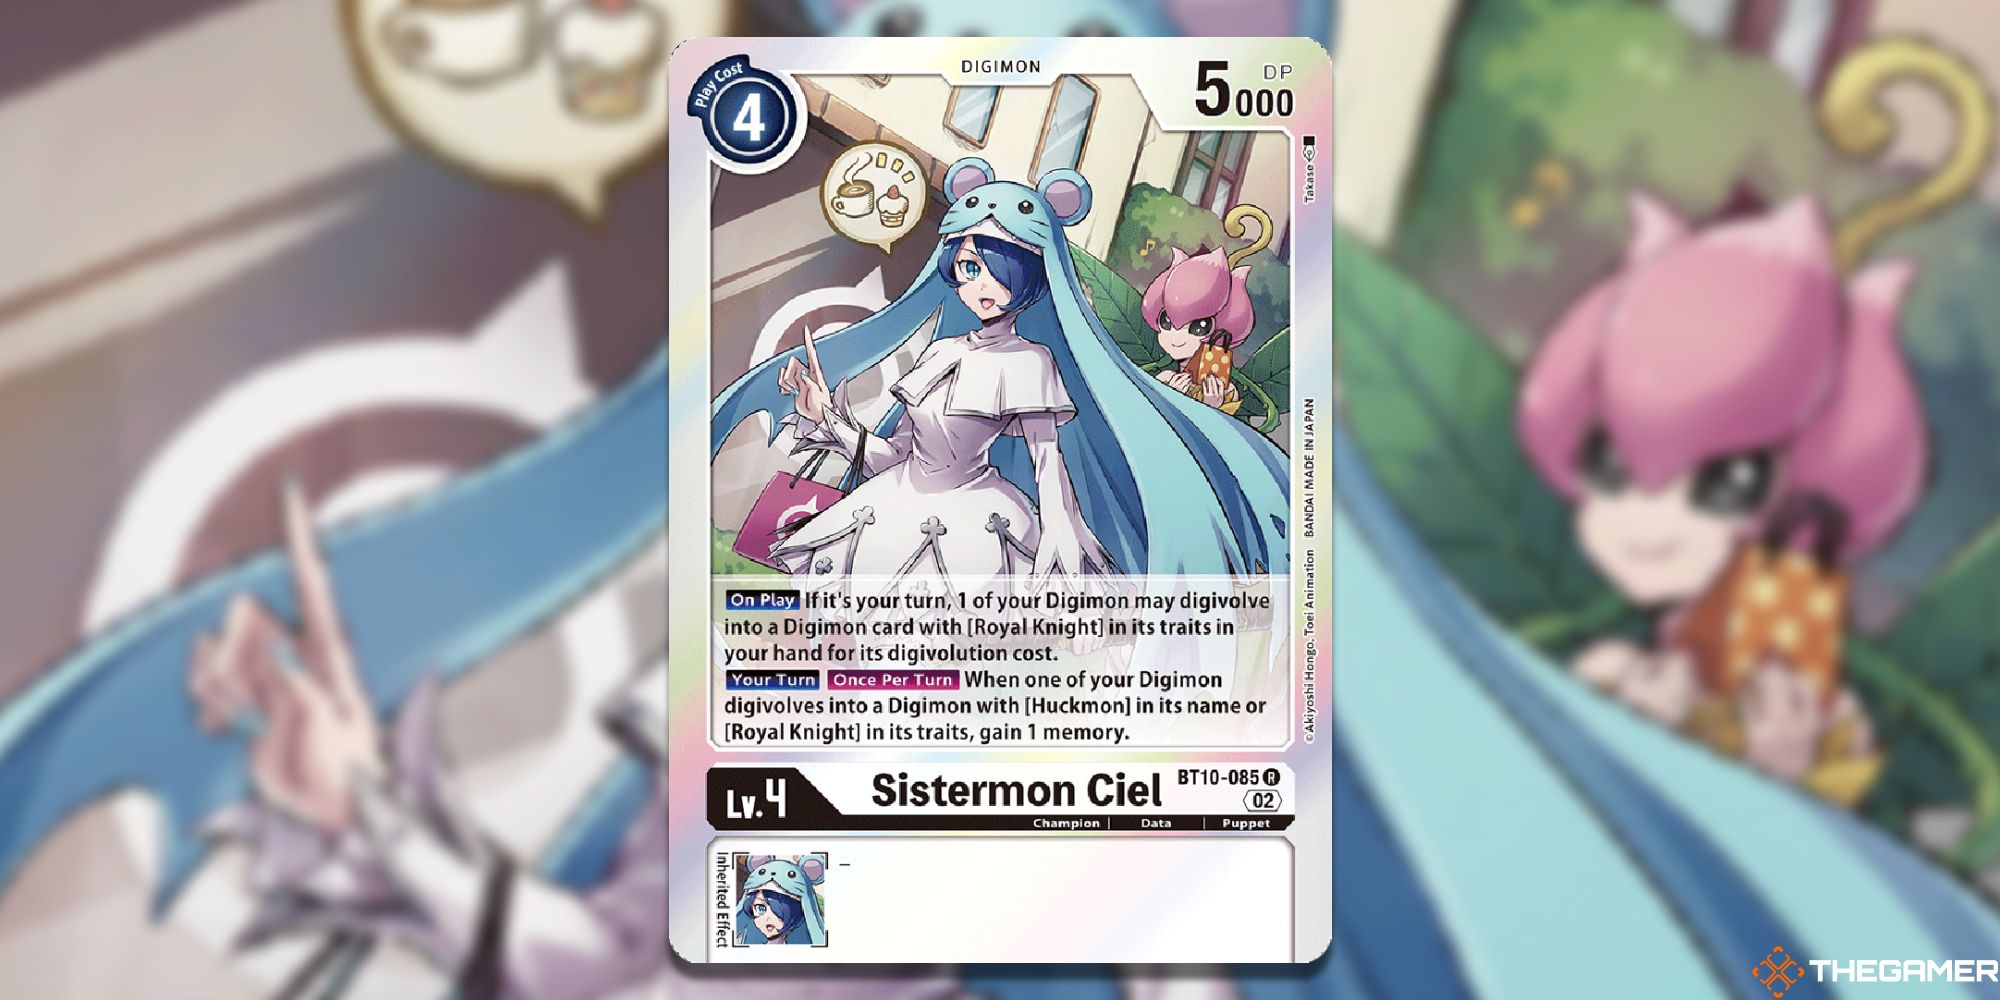 sistermon ciel image digimon card game bt10 with blur